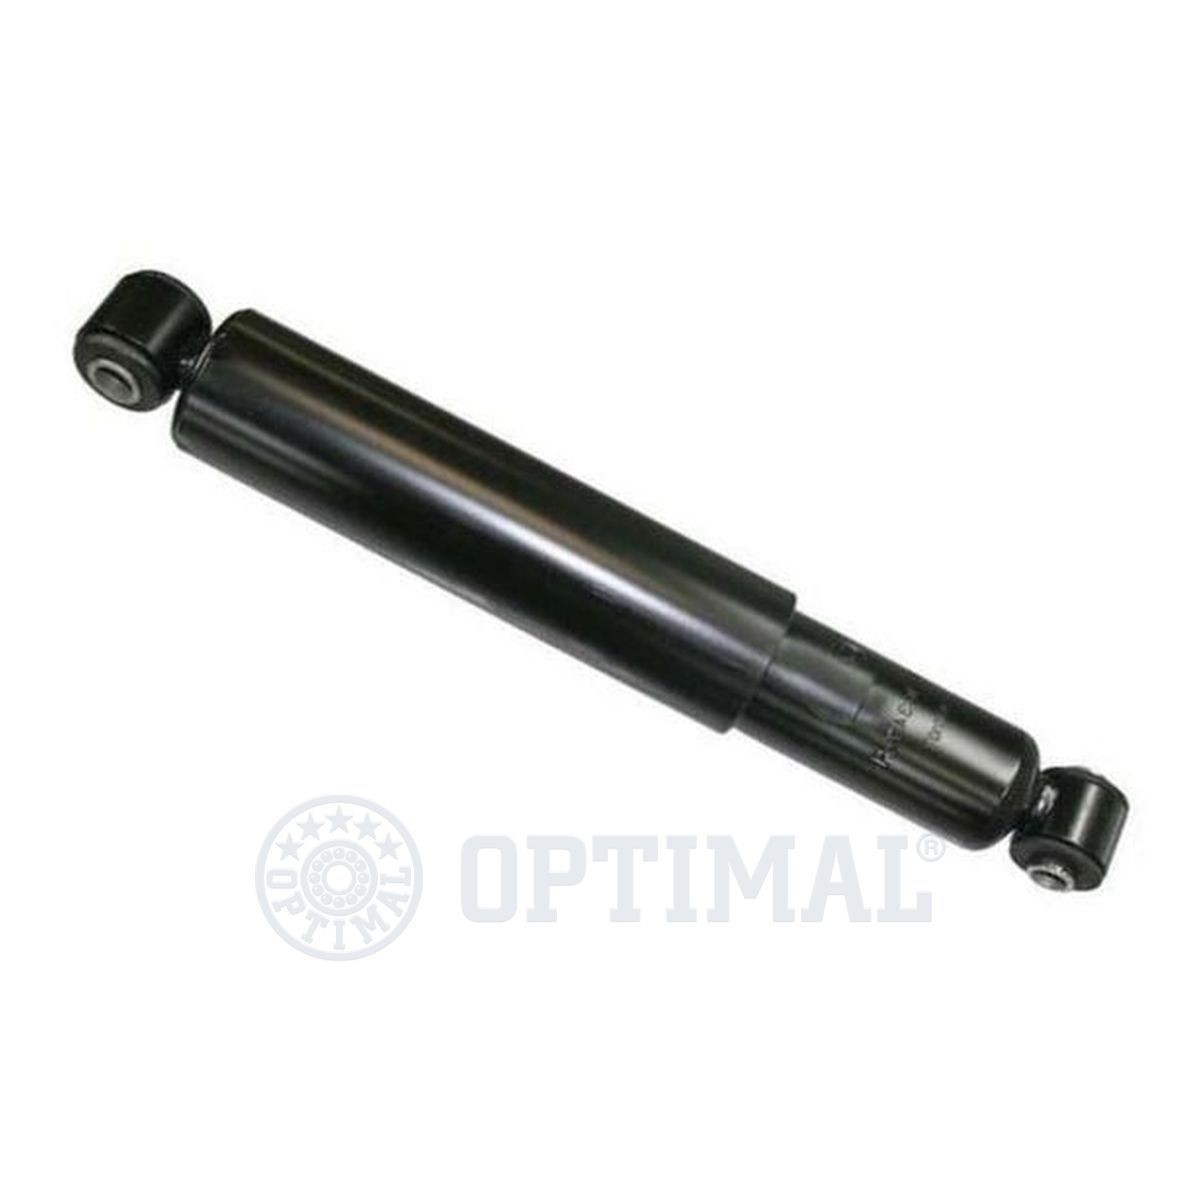 OPTIMAL A-16347H Shock absorber Rear Axle, Oil Pressure, Twin-Tube, Spring-bearing Damper, Top eye, Bottom eye